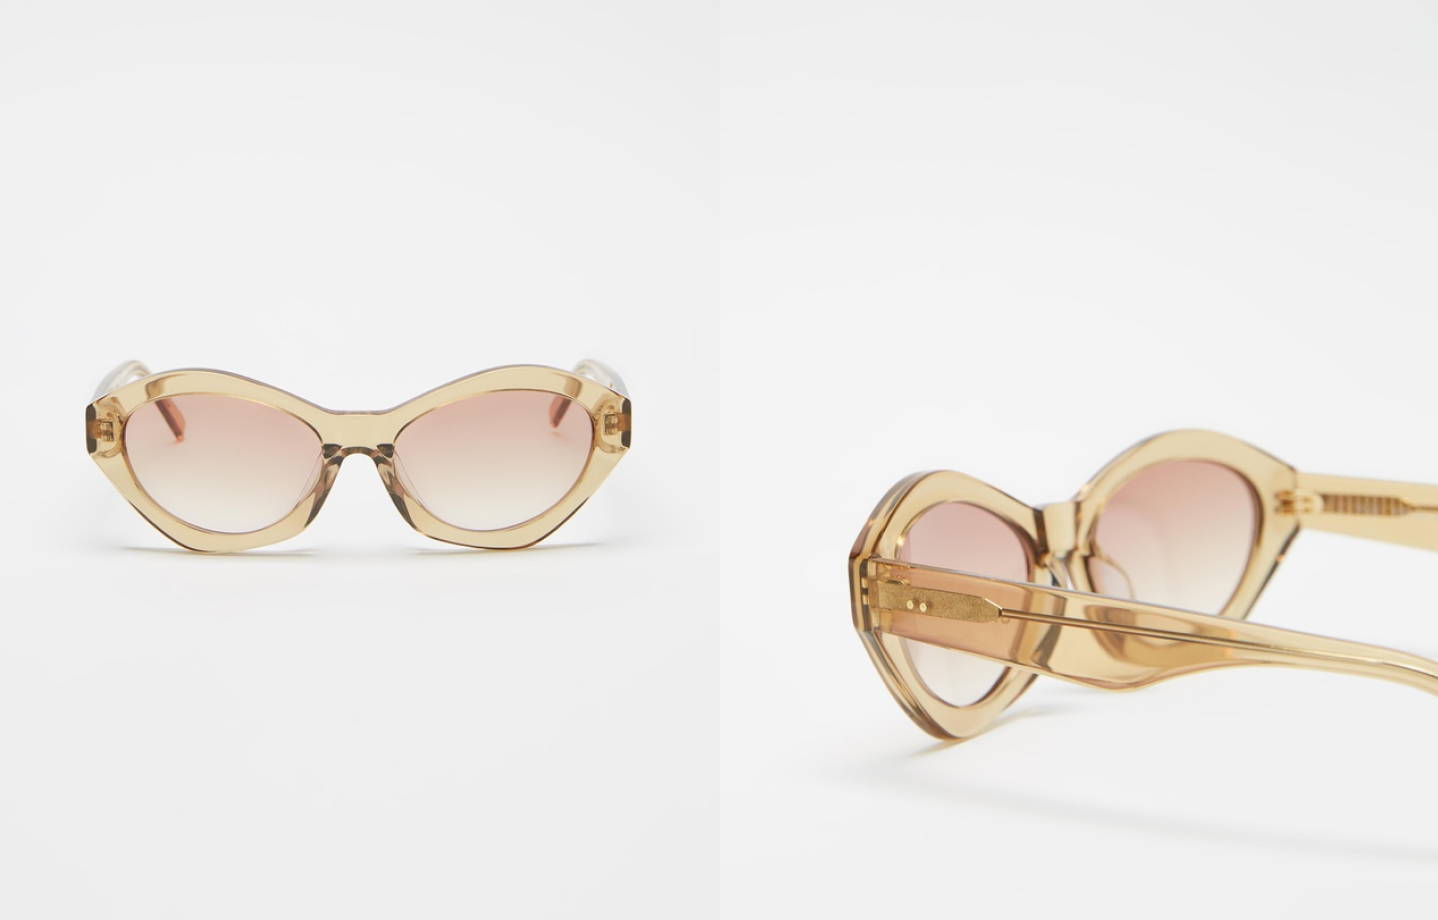 Oroton sunglasses for oval face shapes 